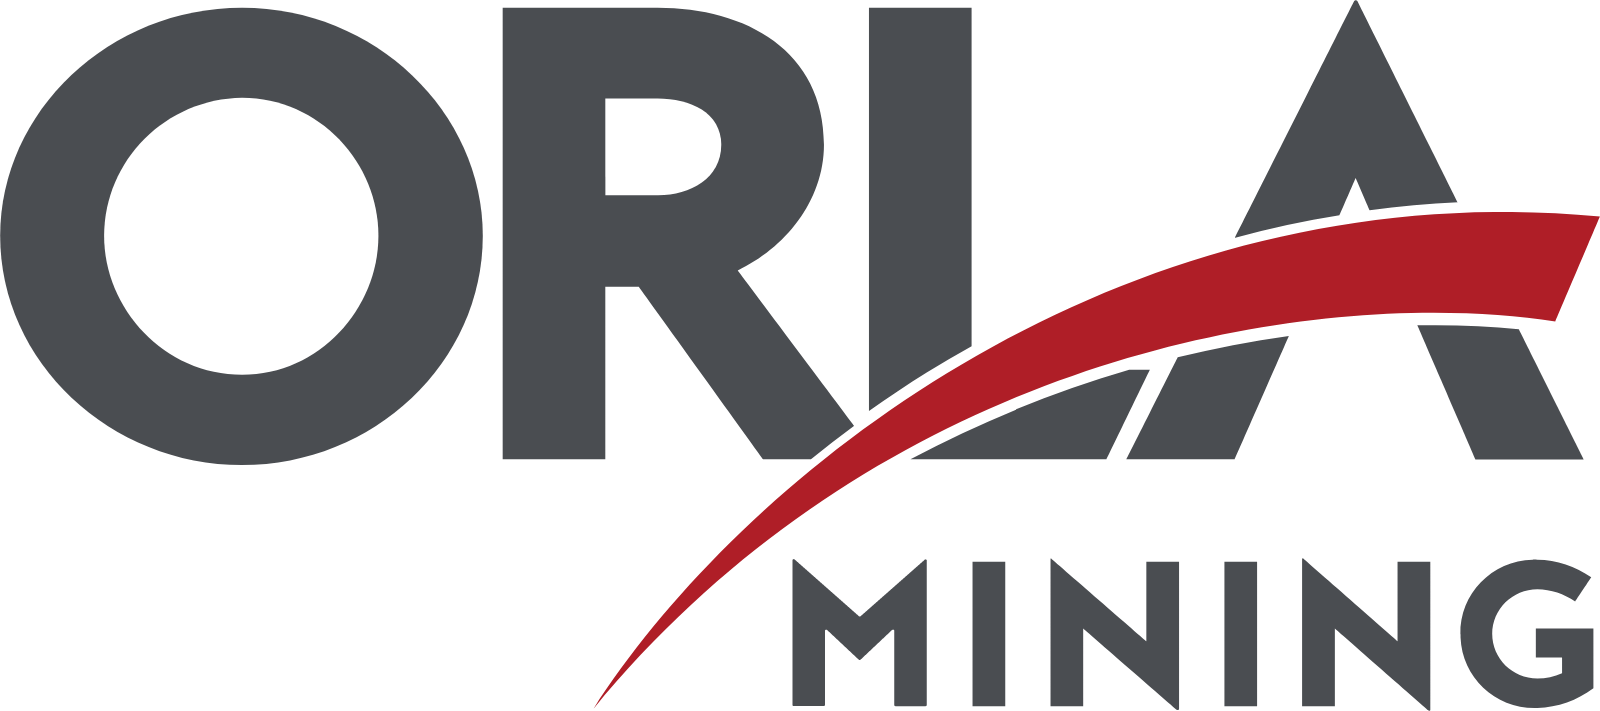 Orla Mining logo large (transparent PNG)